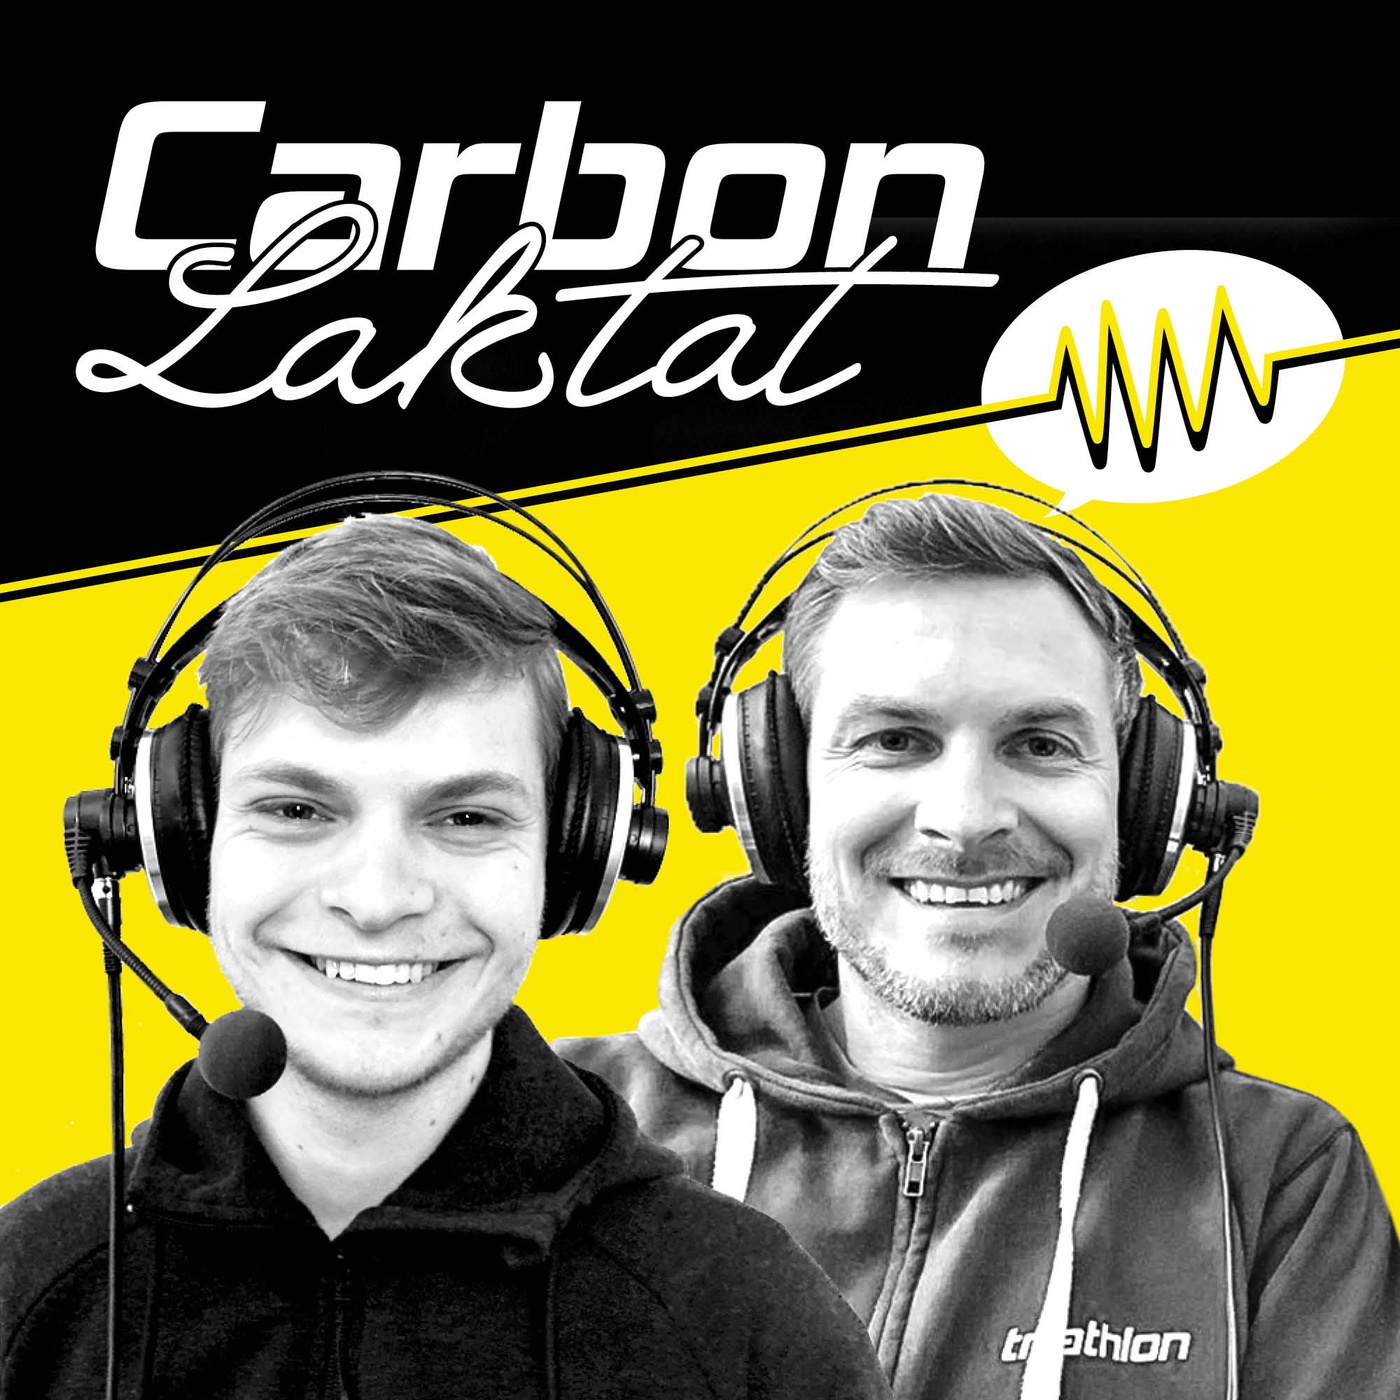 Carbon & Laktat: Rankings, Roth und Rekorde